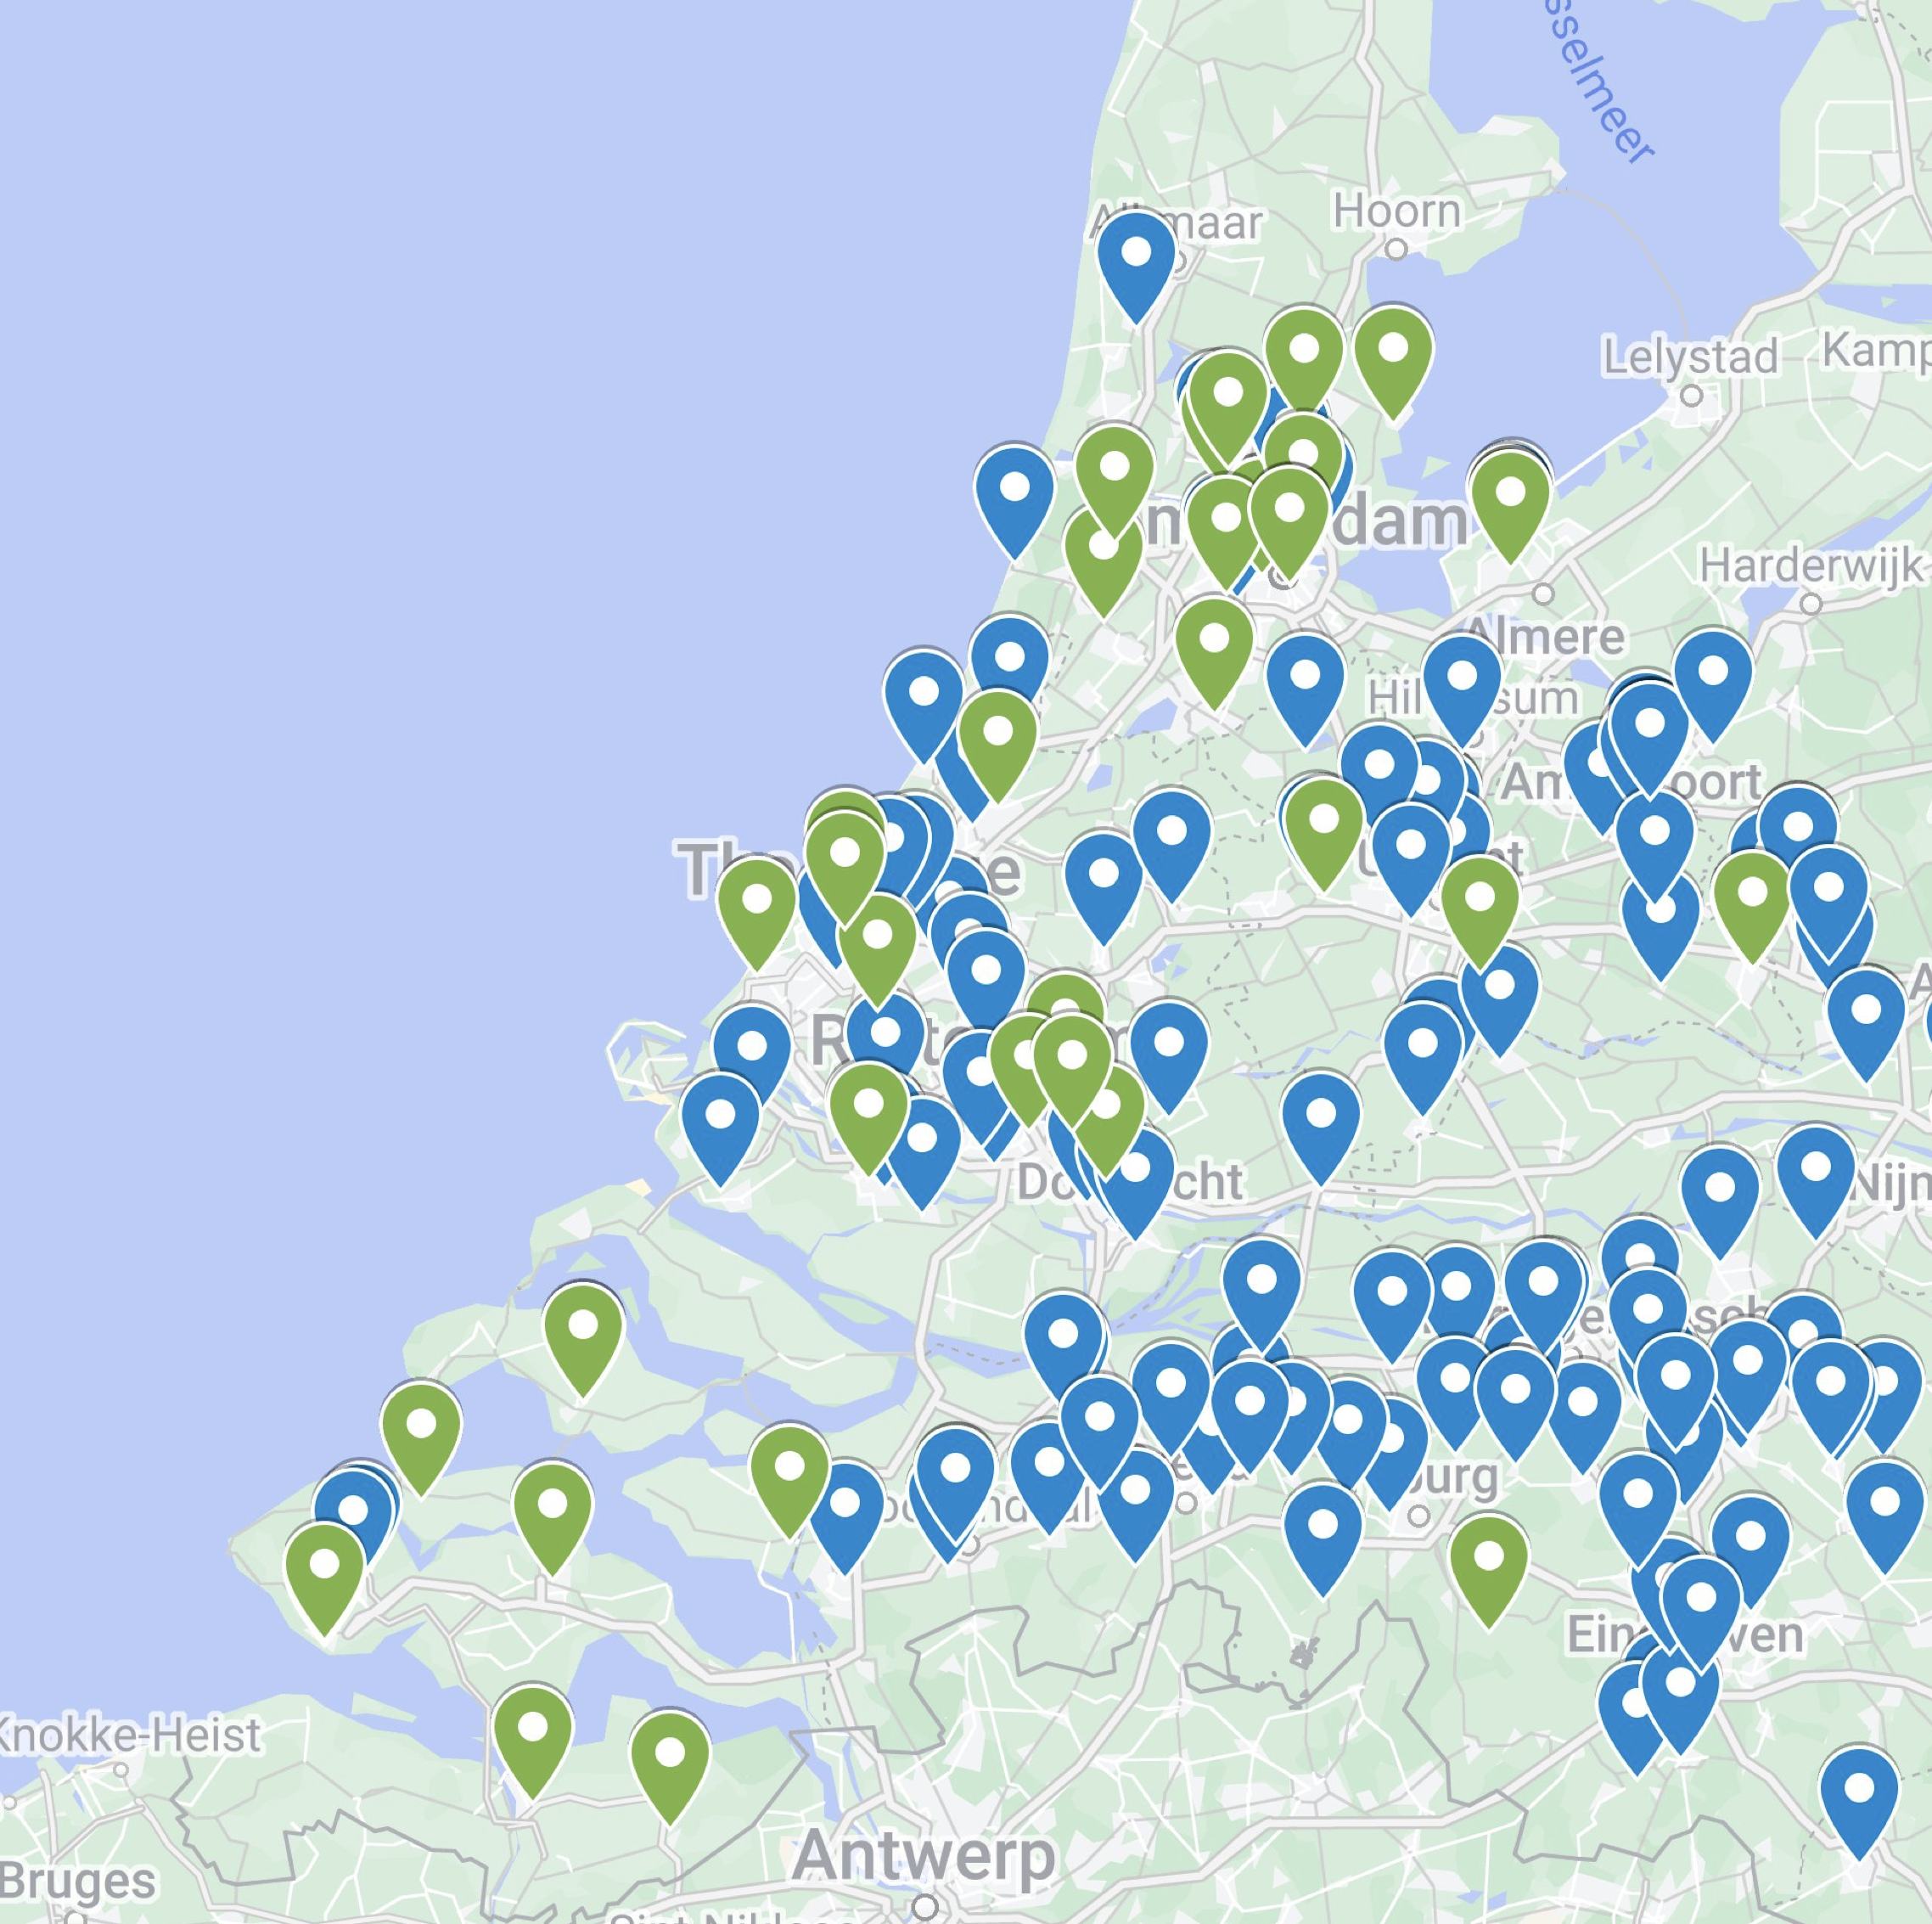 kaart zuid holland spreiding helpsoq toestellen ergo's